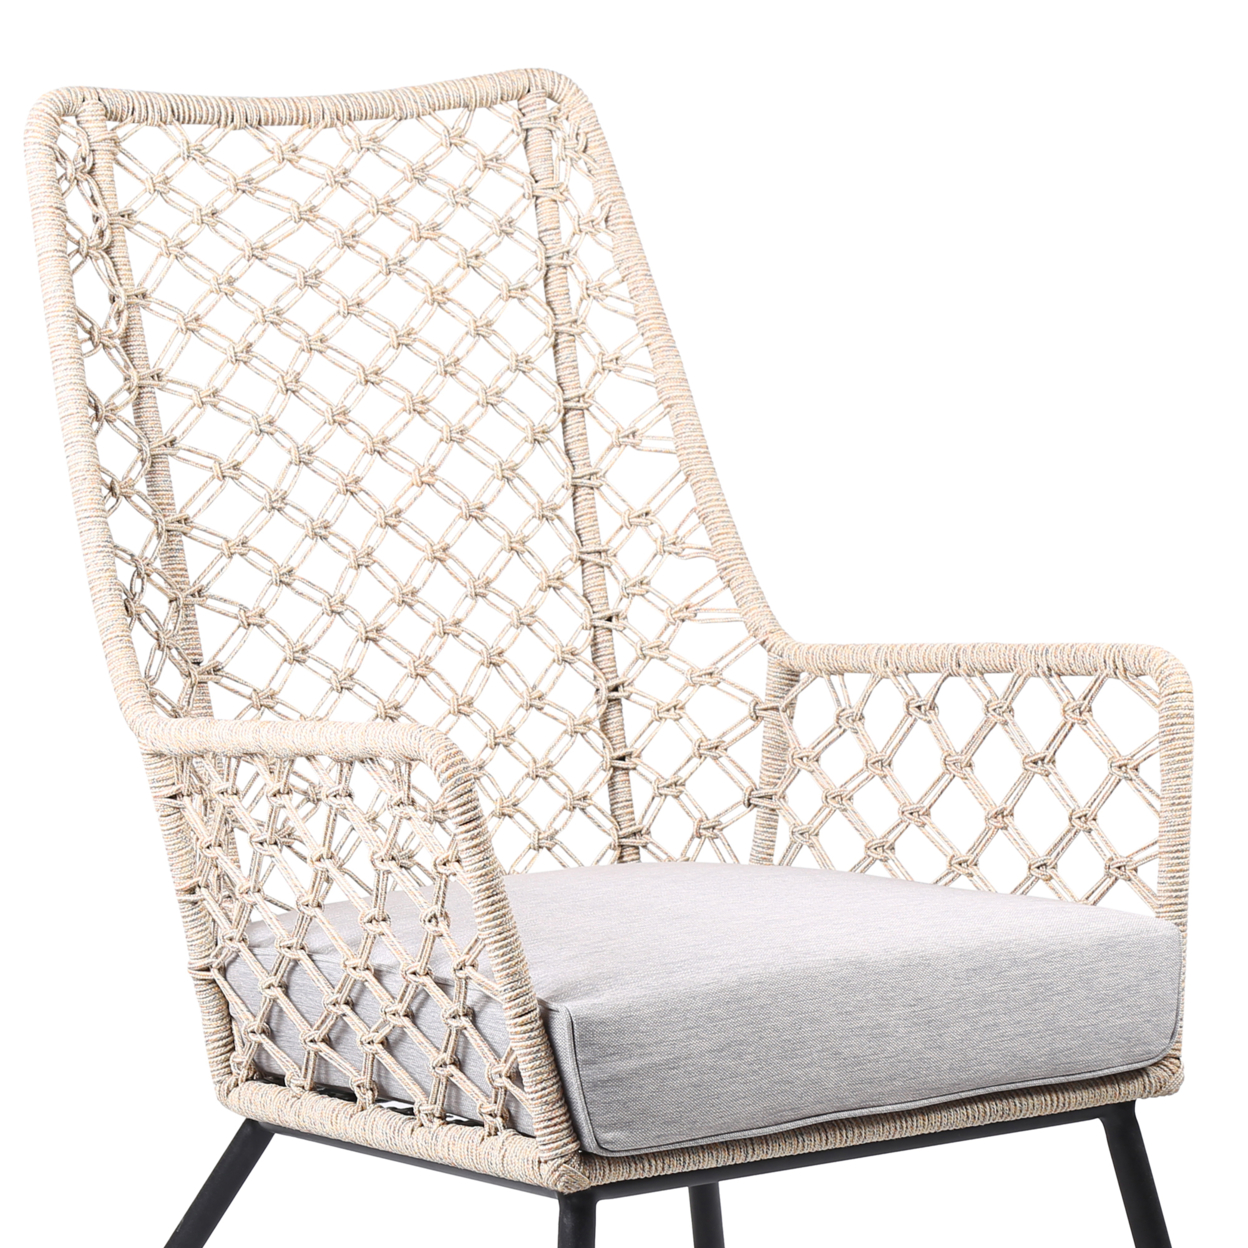 Indoor Outdoor Lounge Chair With Intricate Woven Lattice Back, Beige- Saltoro Sherpi